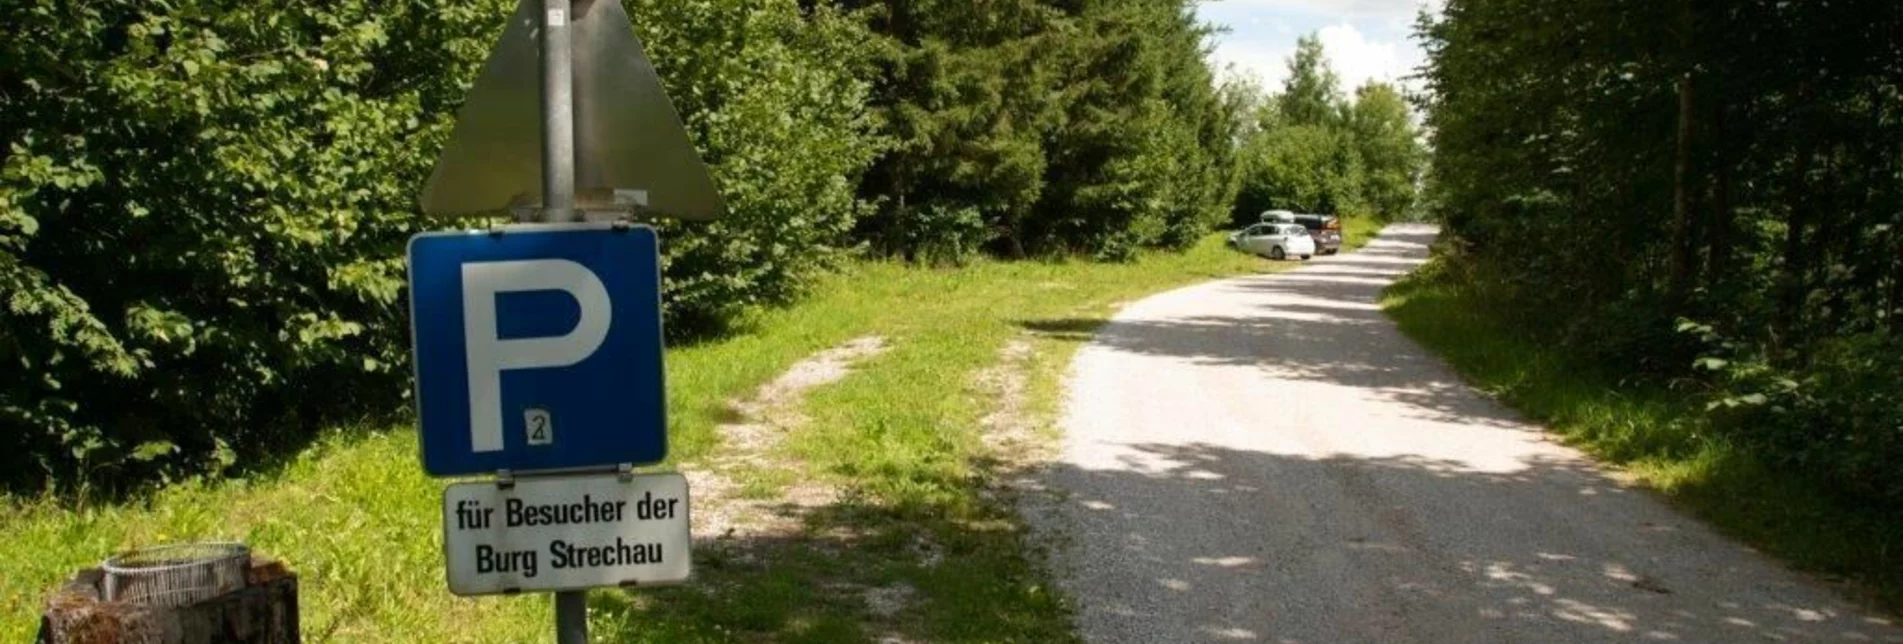 Hiking route Strechau Castle circular walk - Touren-Impression #1 | © TV Gesäuse